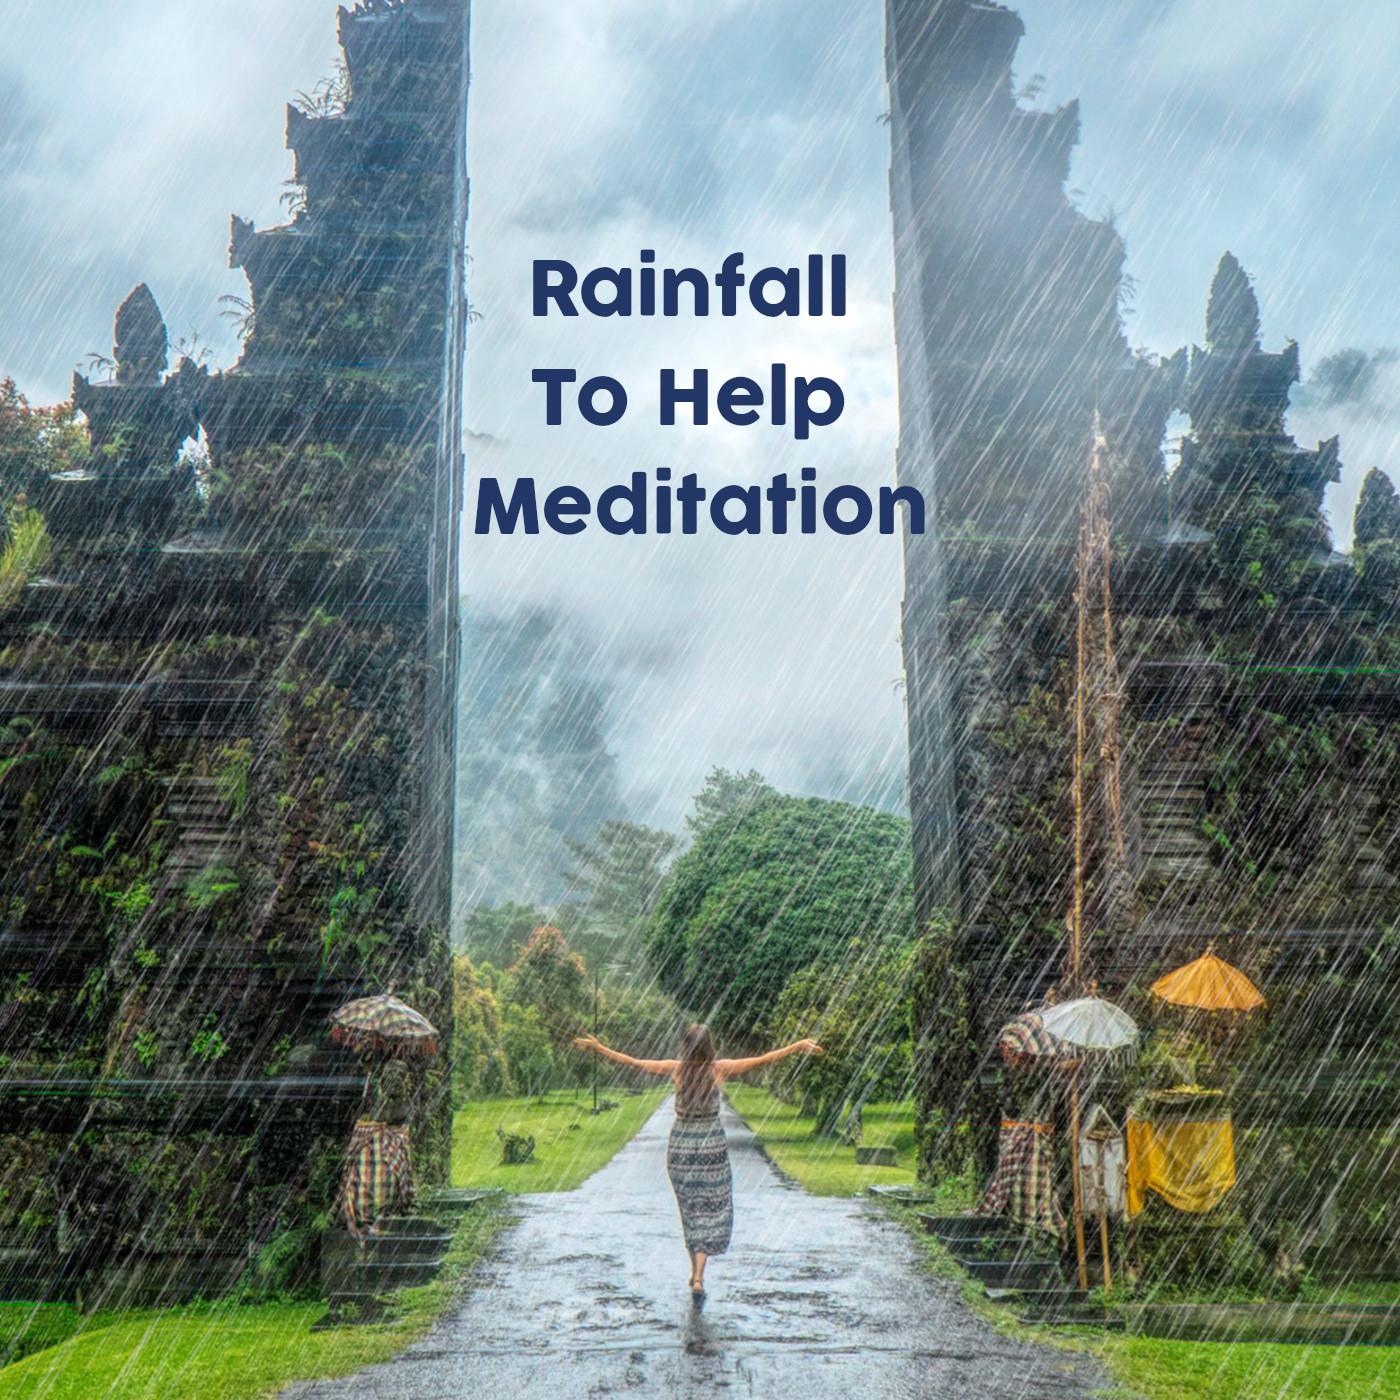 Rainfall to Help Meditation